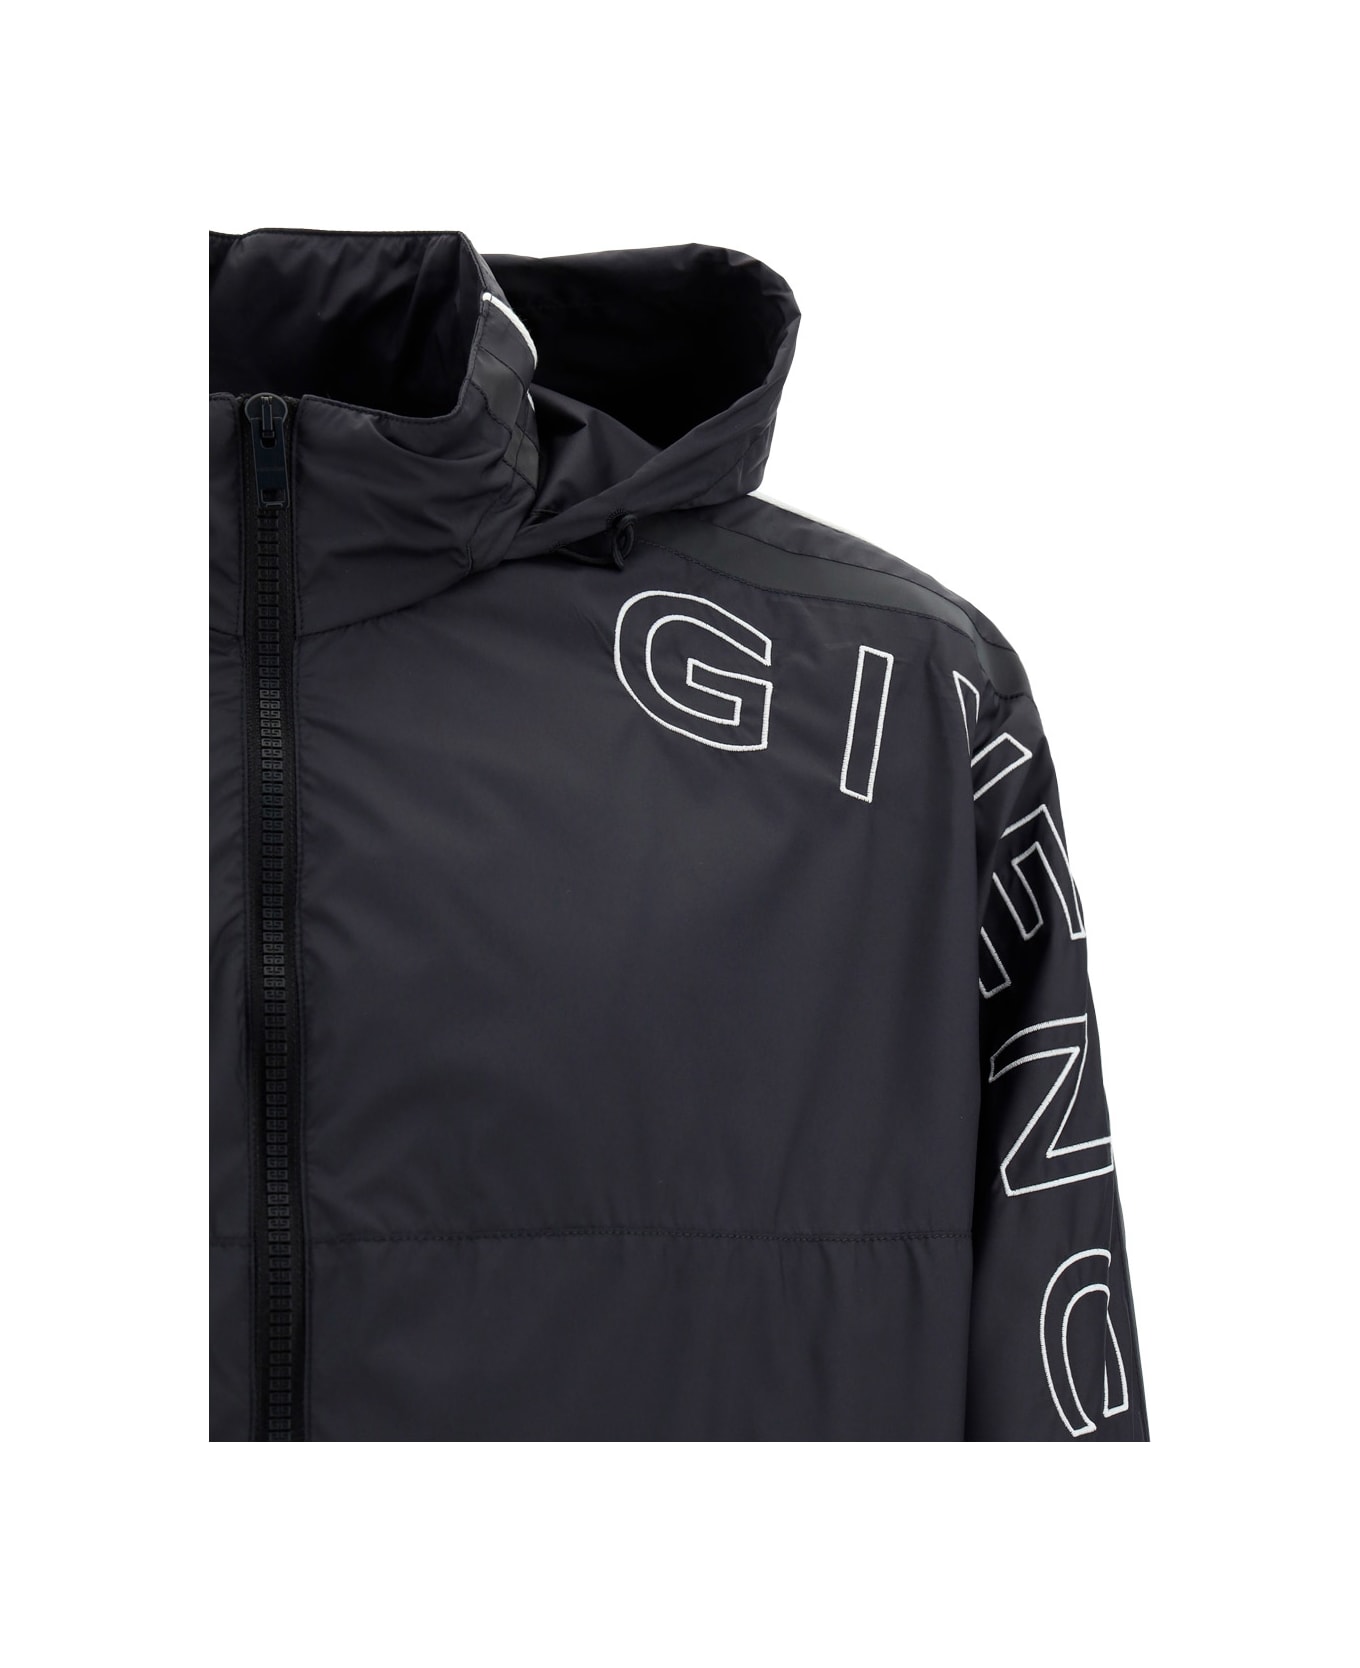 Givenchy Sports Jacket - Black